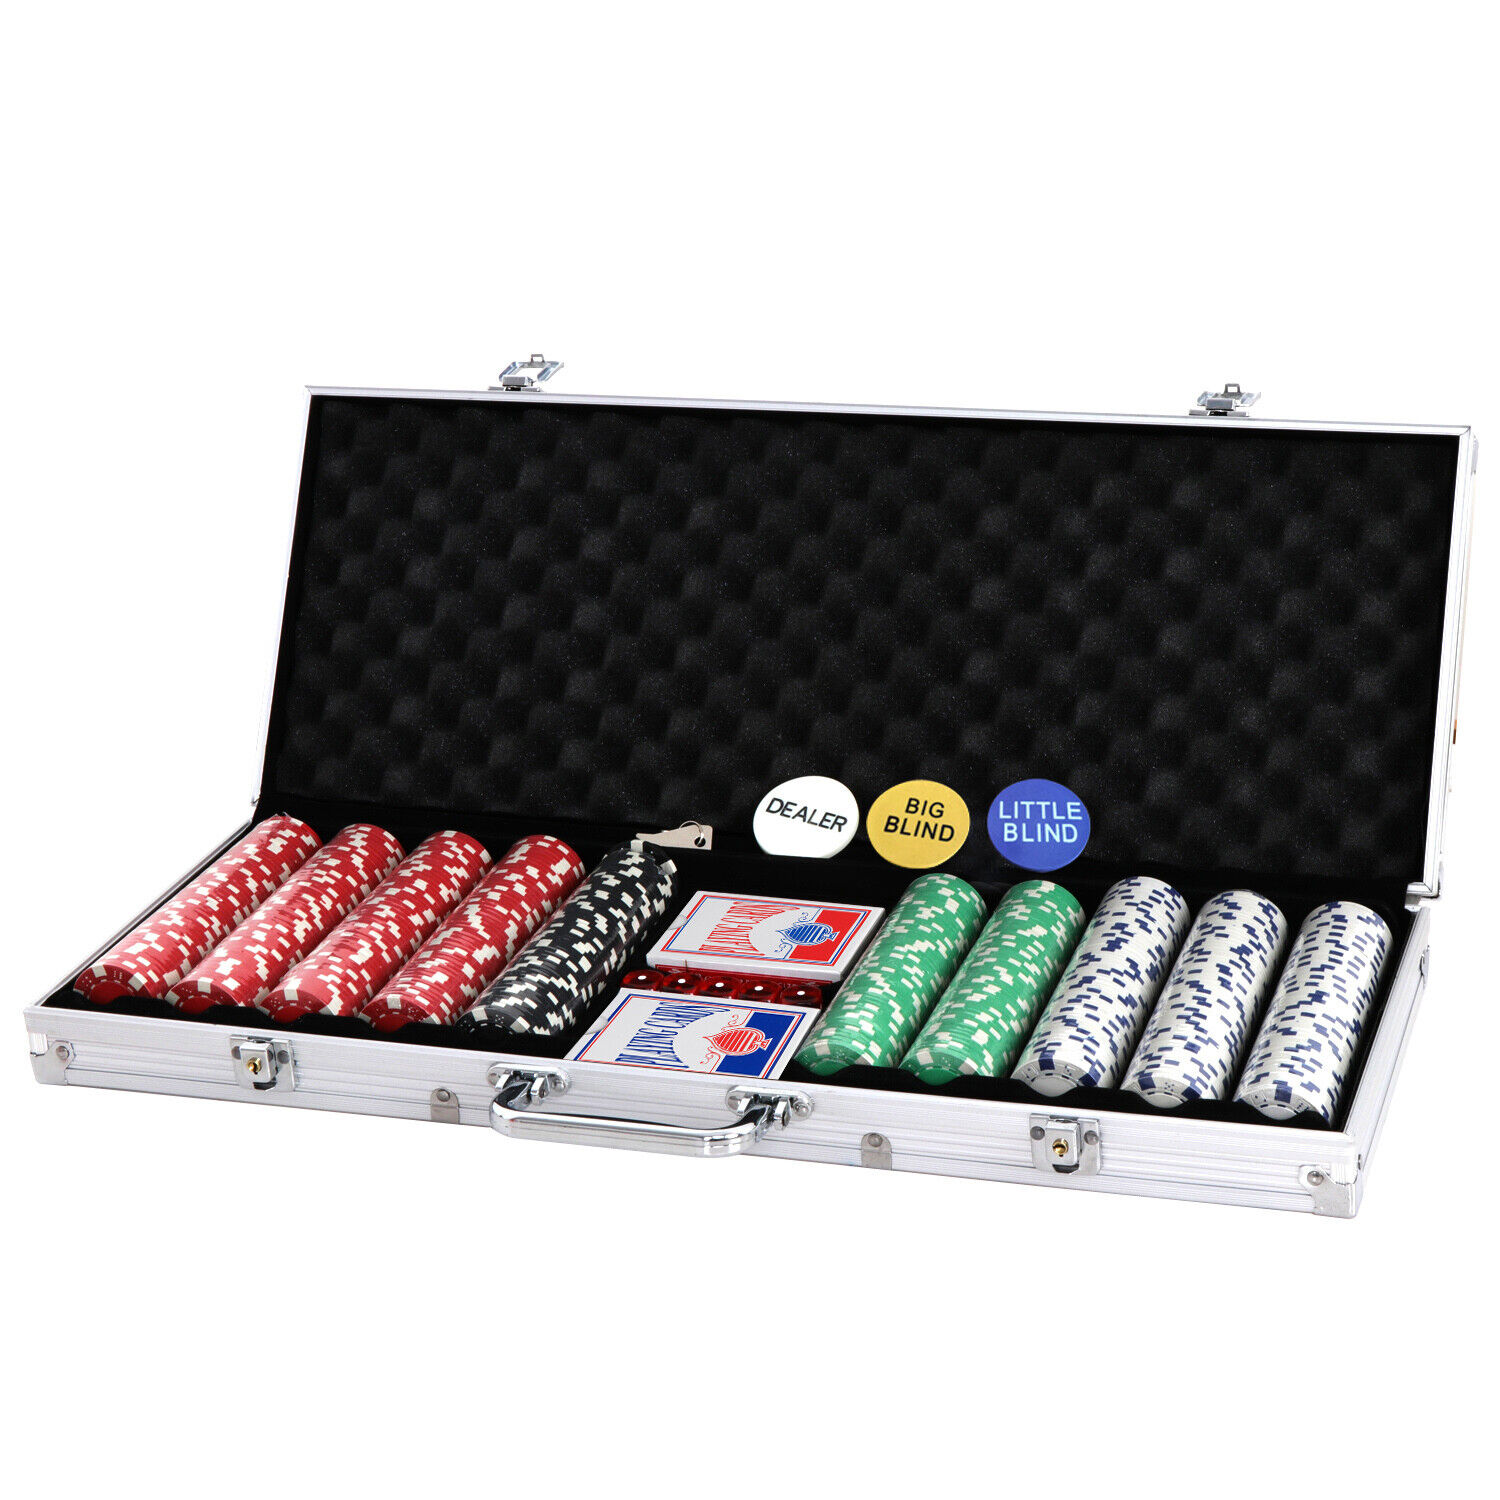  500 Chips Set Poker Chip11.5 Gram Holdem Cards Game W/Aluminum Case  Dices